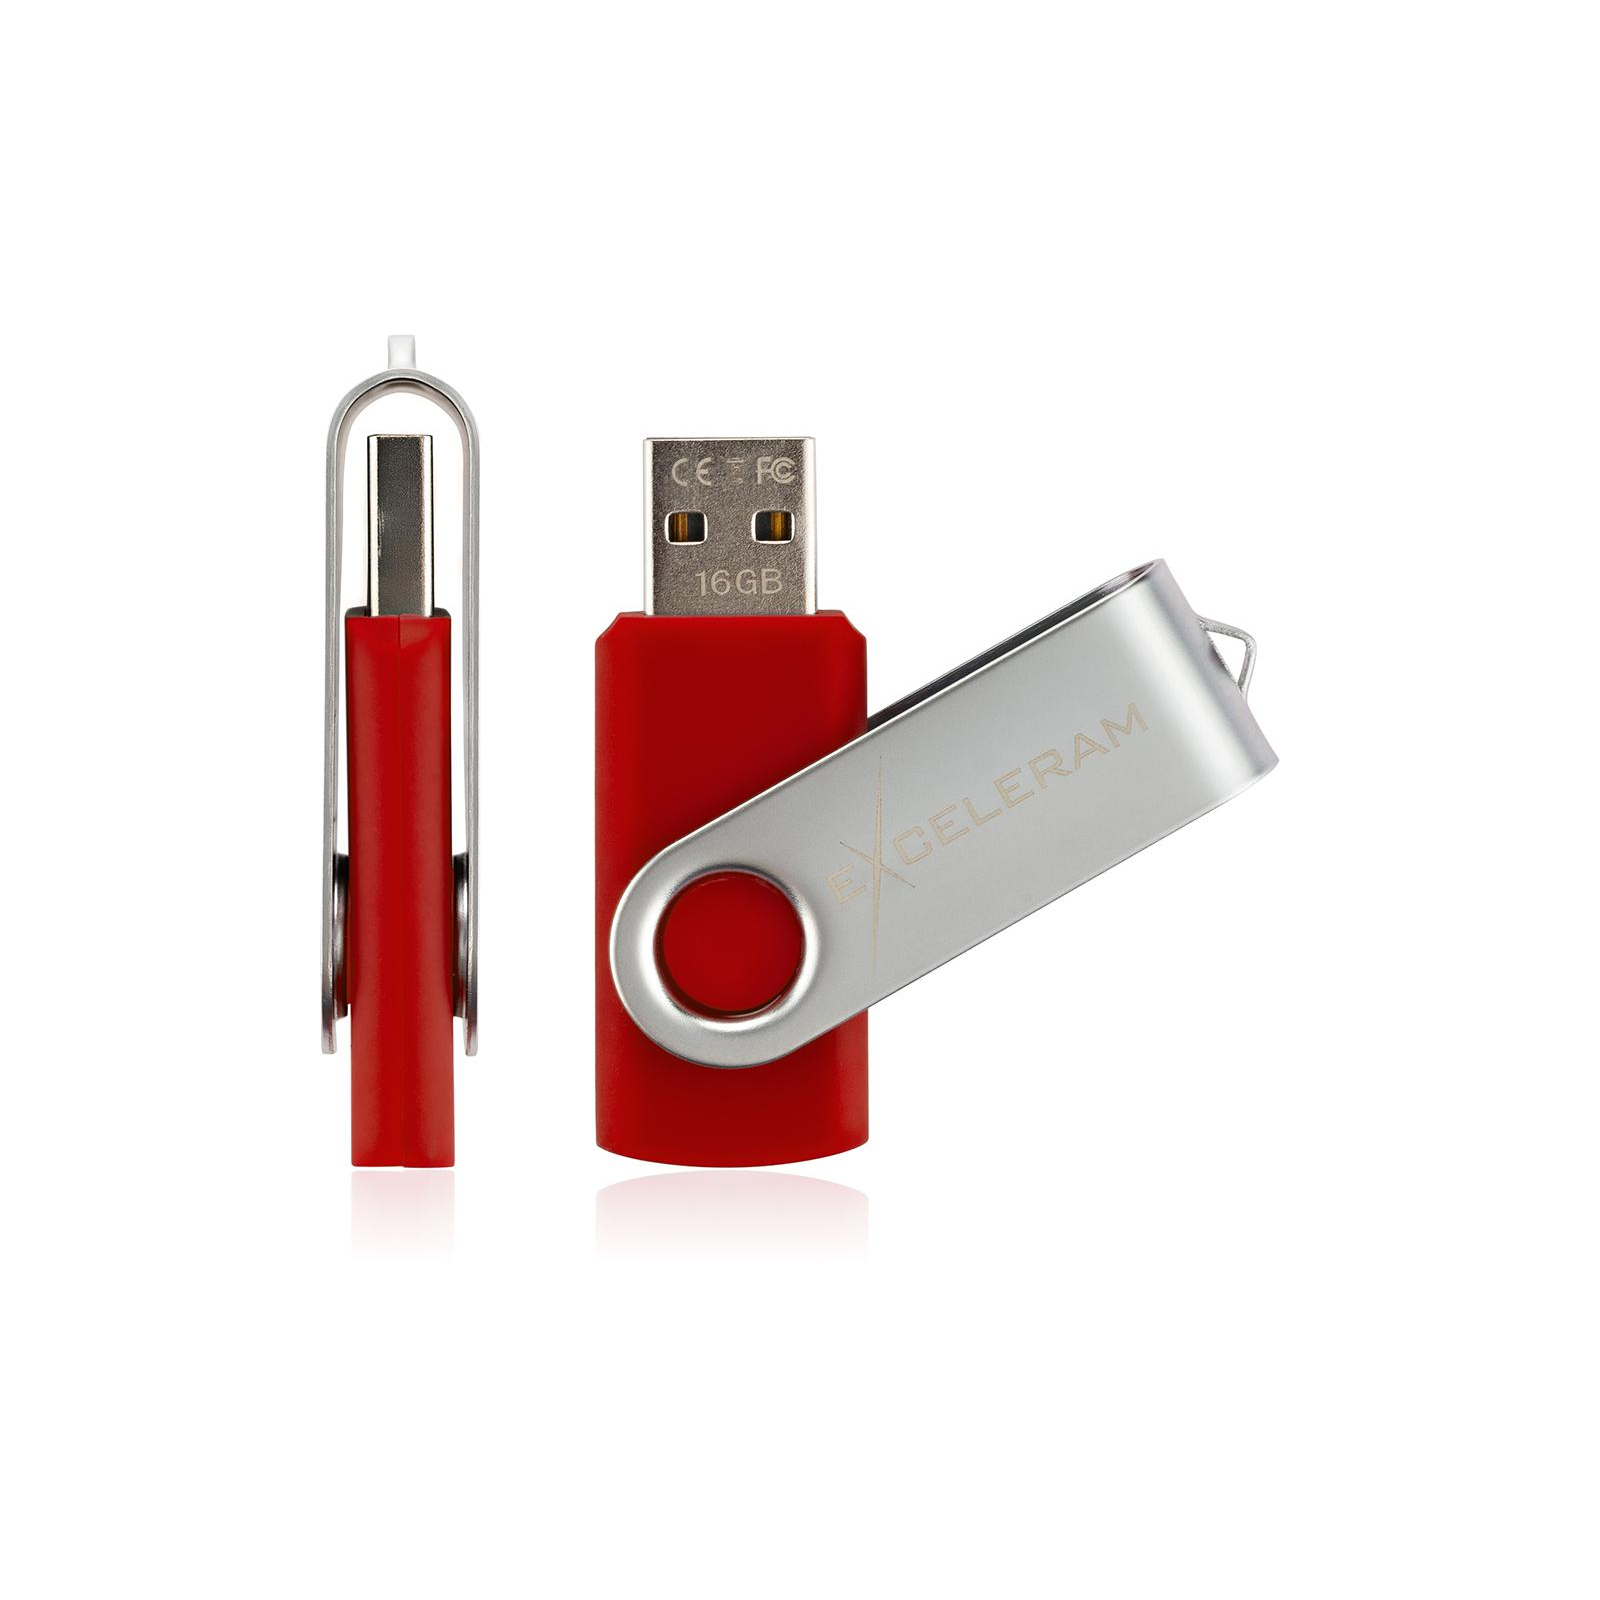 USB флеш накопитель eXceleram 8GB P1 Series Silver/Red USB 2.0 (EXP1U2SIRE08) изображение 4